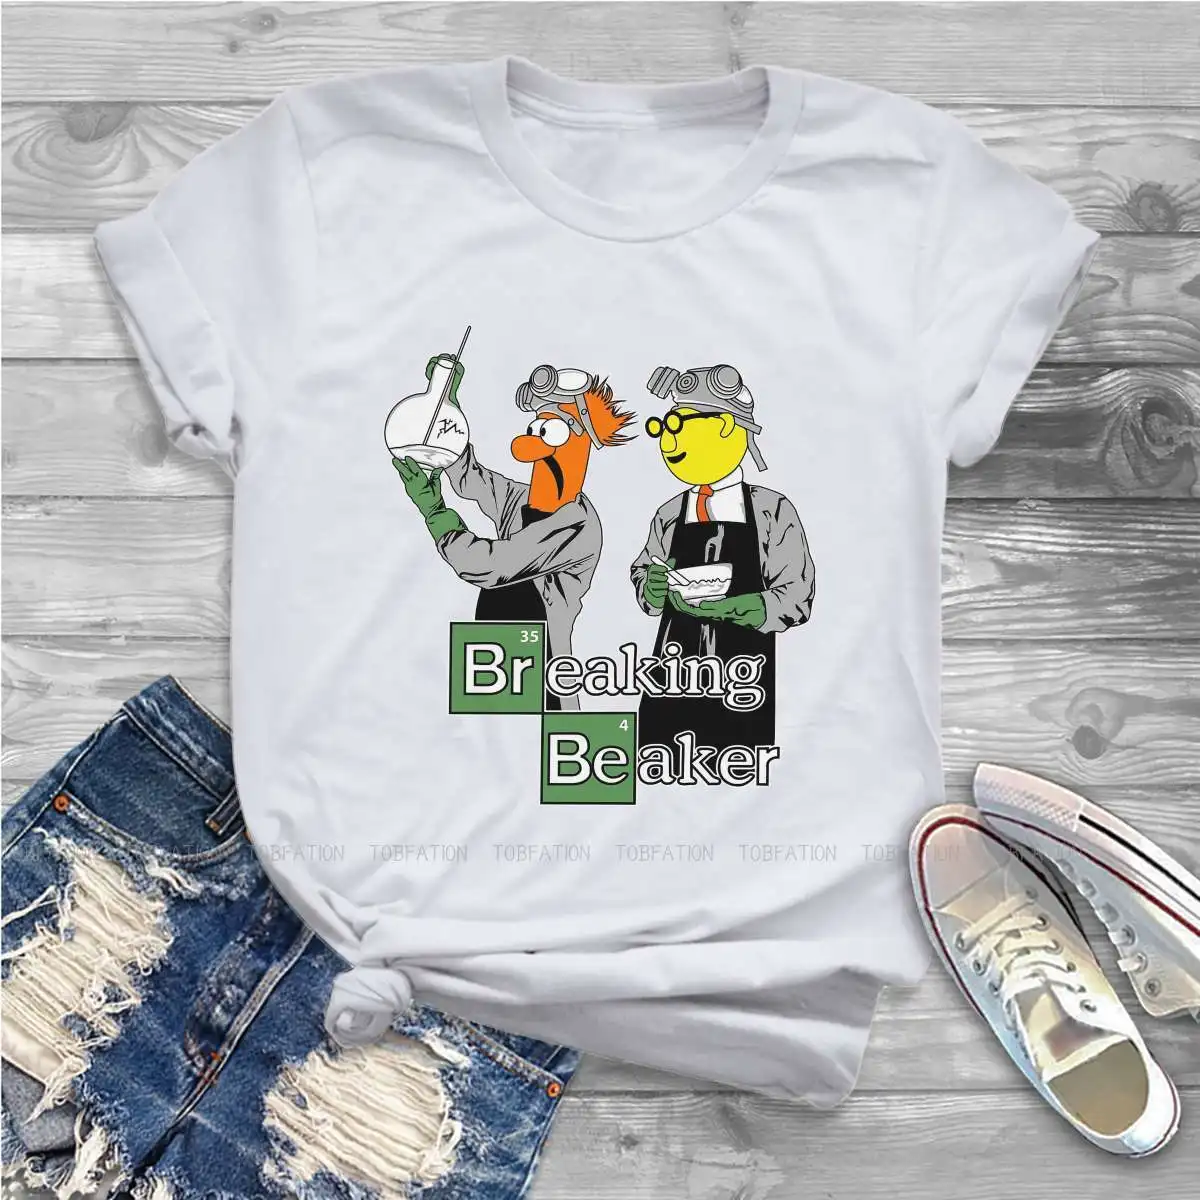 

Beaker Essential Feminine Shirts Breaking Bad Walter White TV Show Oversized T-shirt Goth Vintage Female Top